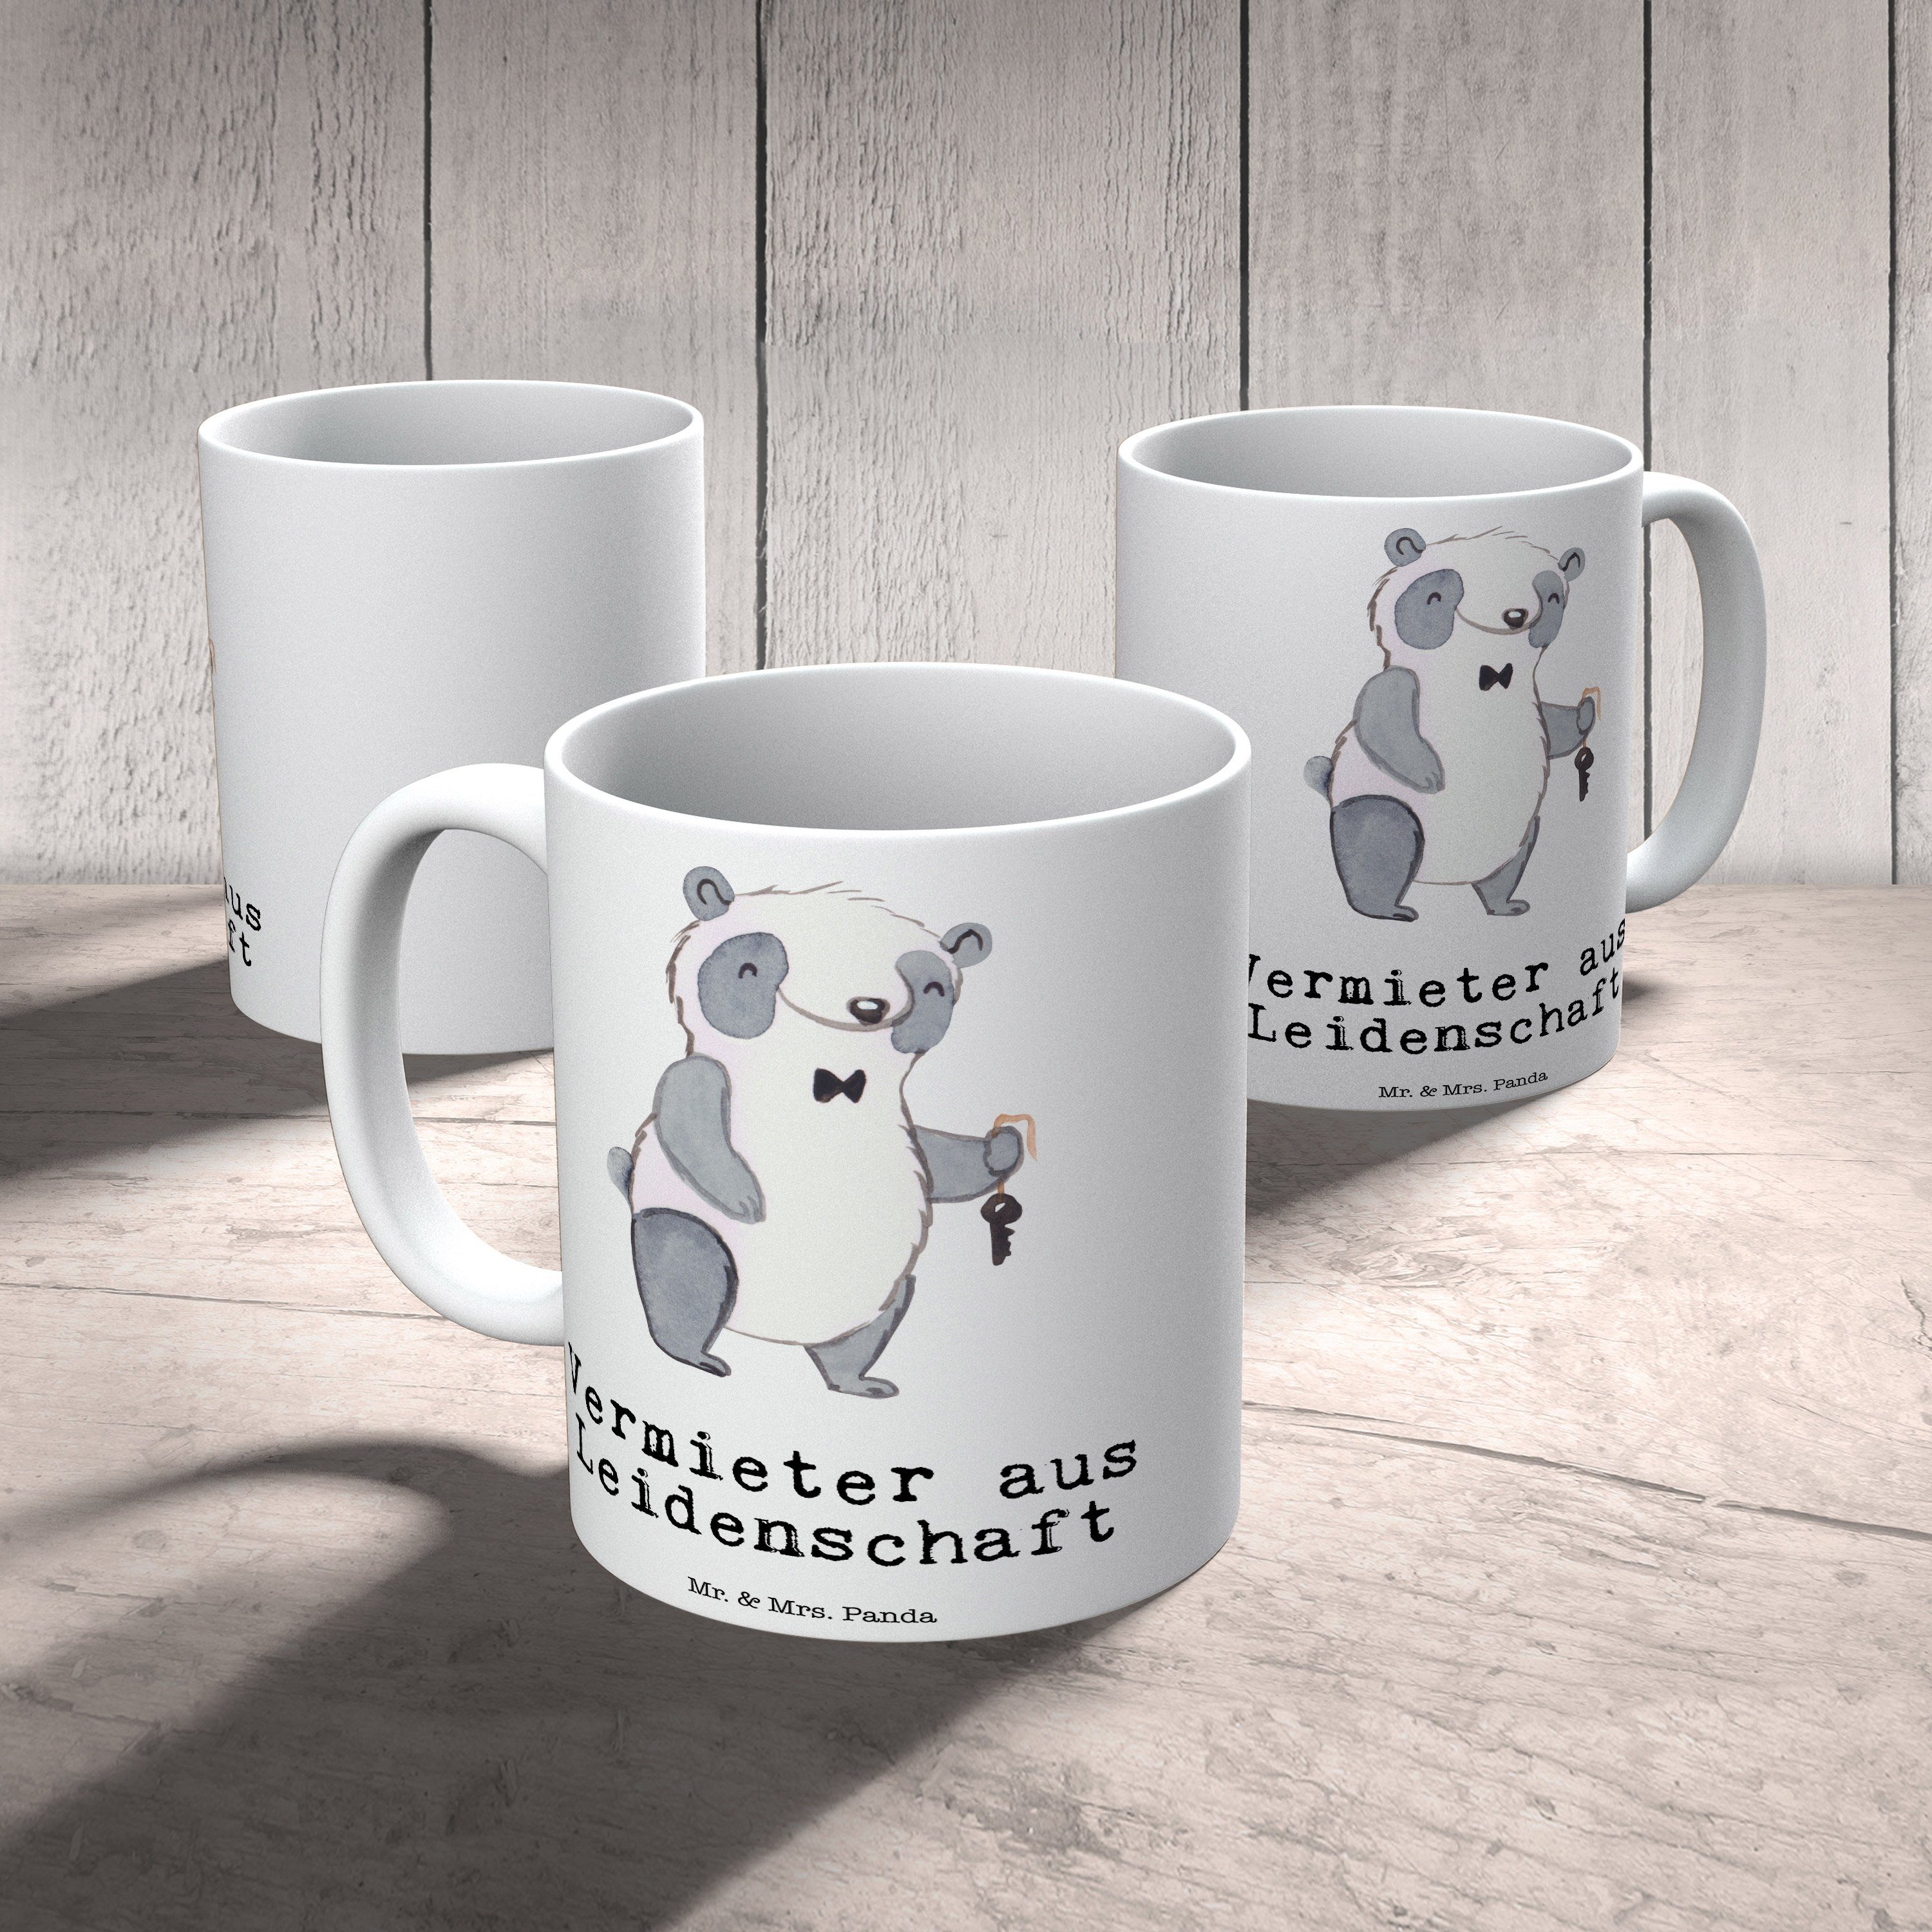 Kollegin, Keramik - Leidenschaft Vermieter aus Geschenk, Weiß & Mrs. Mr. Panda - Tasse Geschenk Tass,